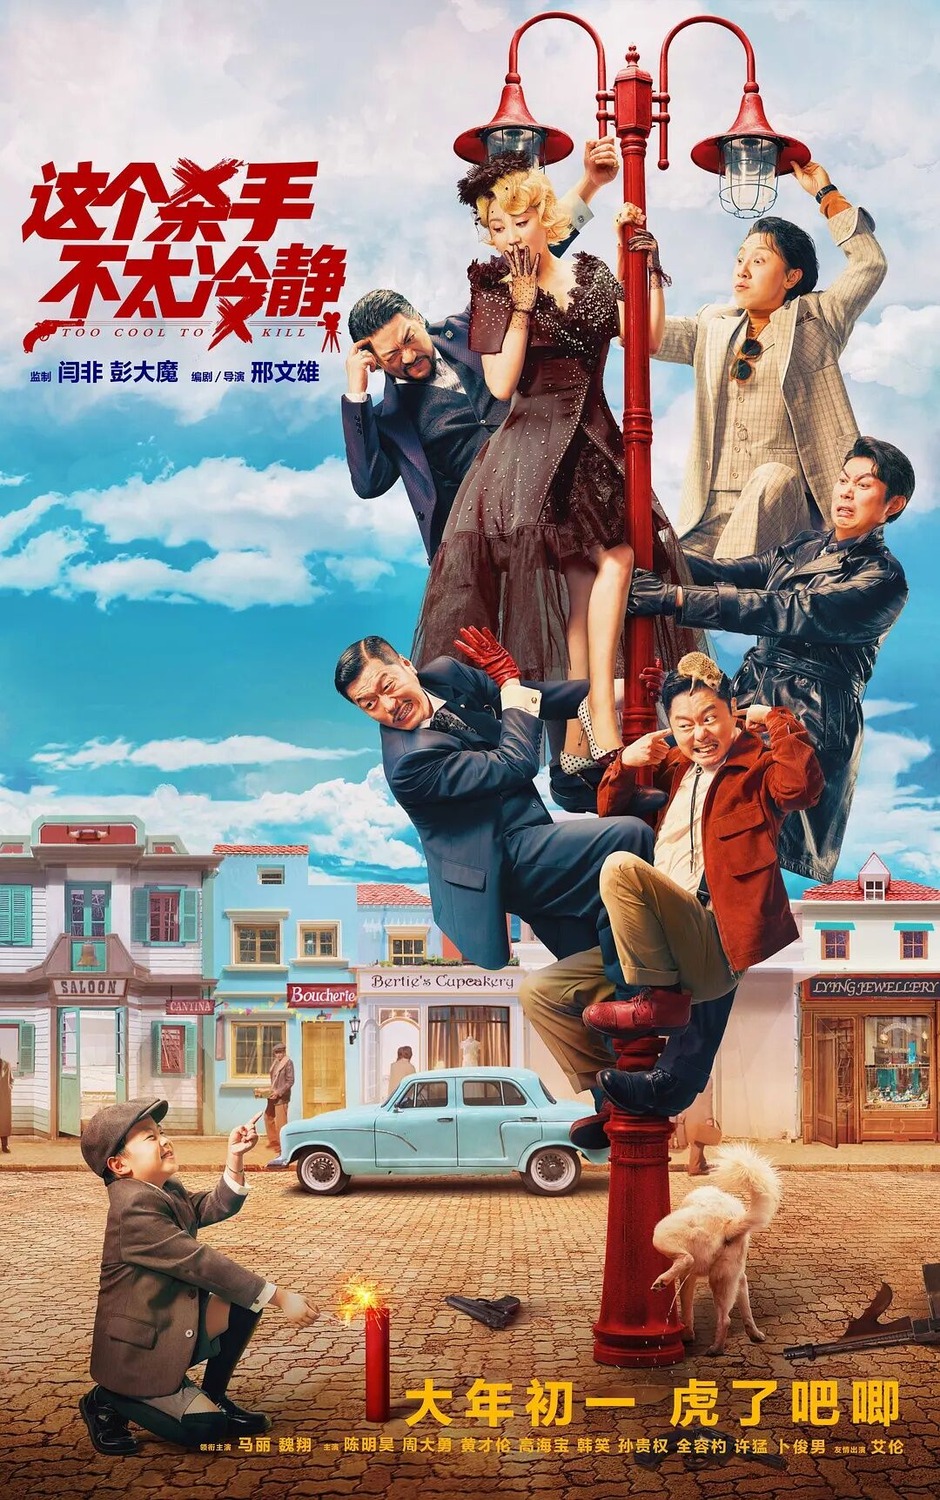 Extra Large Movie Poster Image for Zhe ge sha shou bu tai leng jing (#2 of 3)